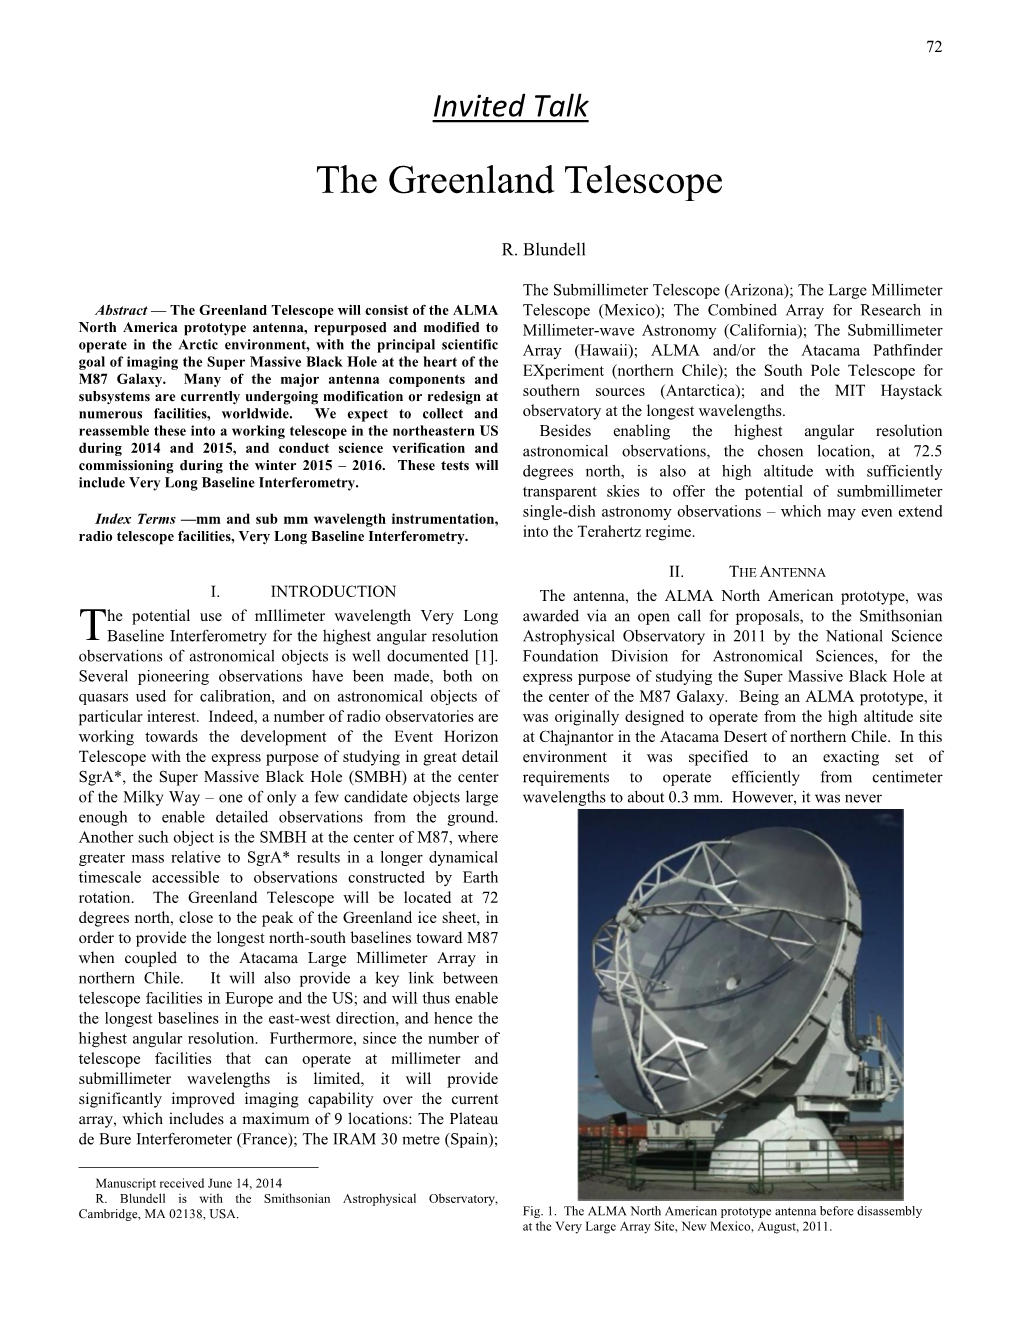 The Greenland Telescope